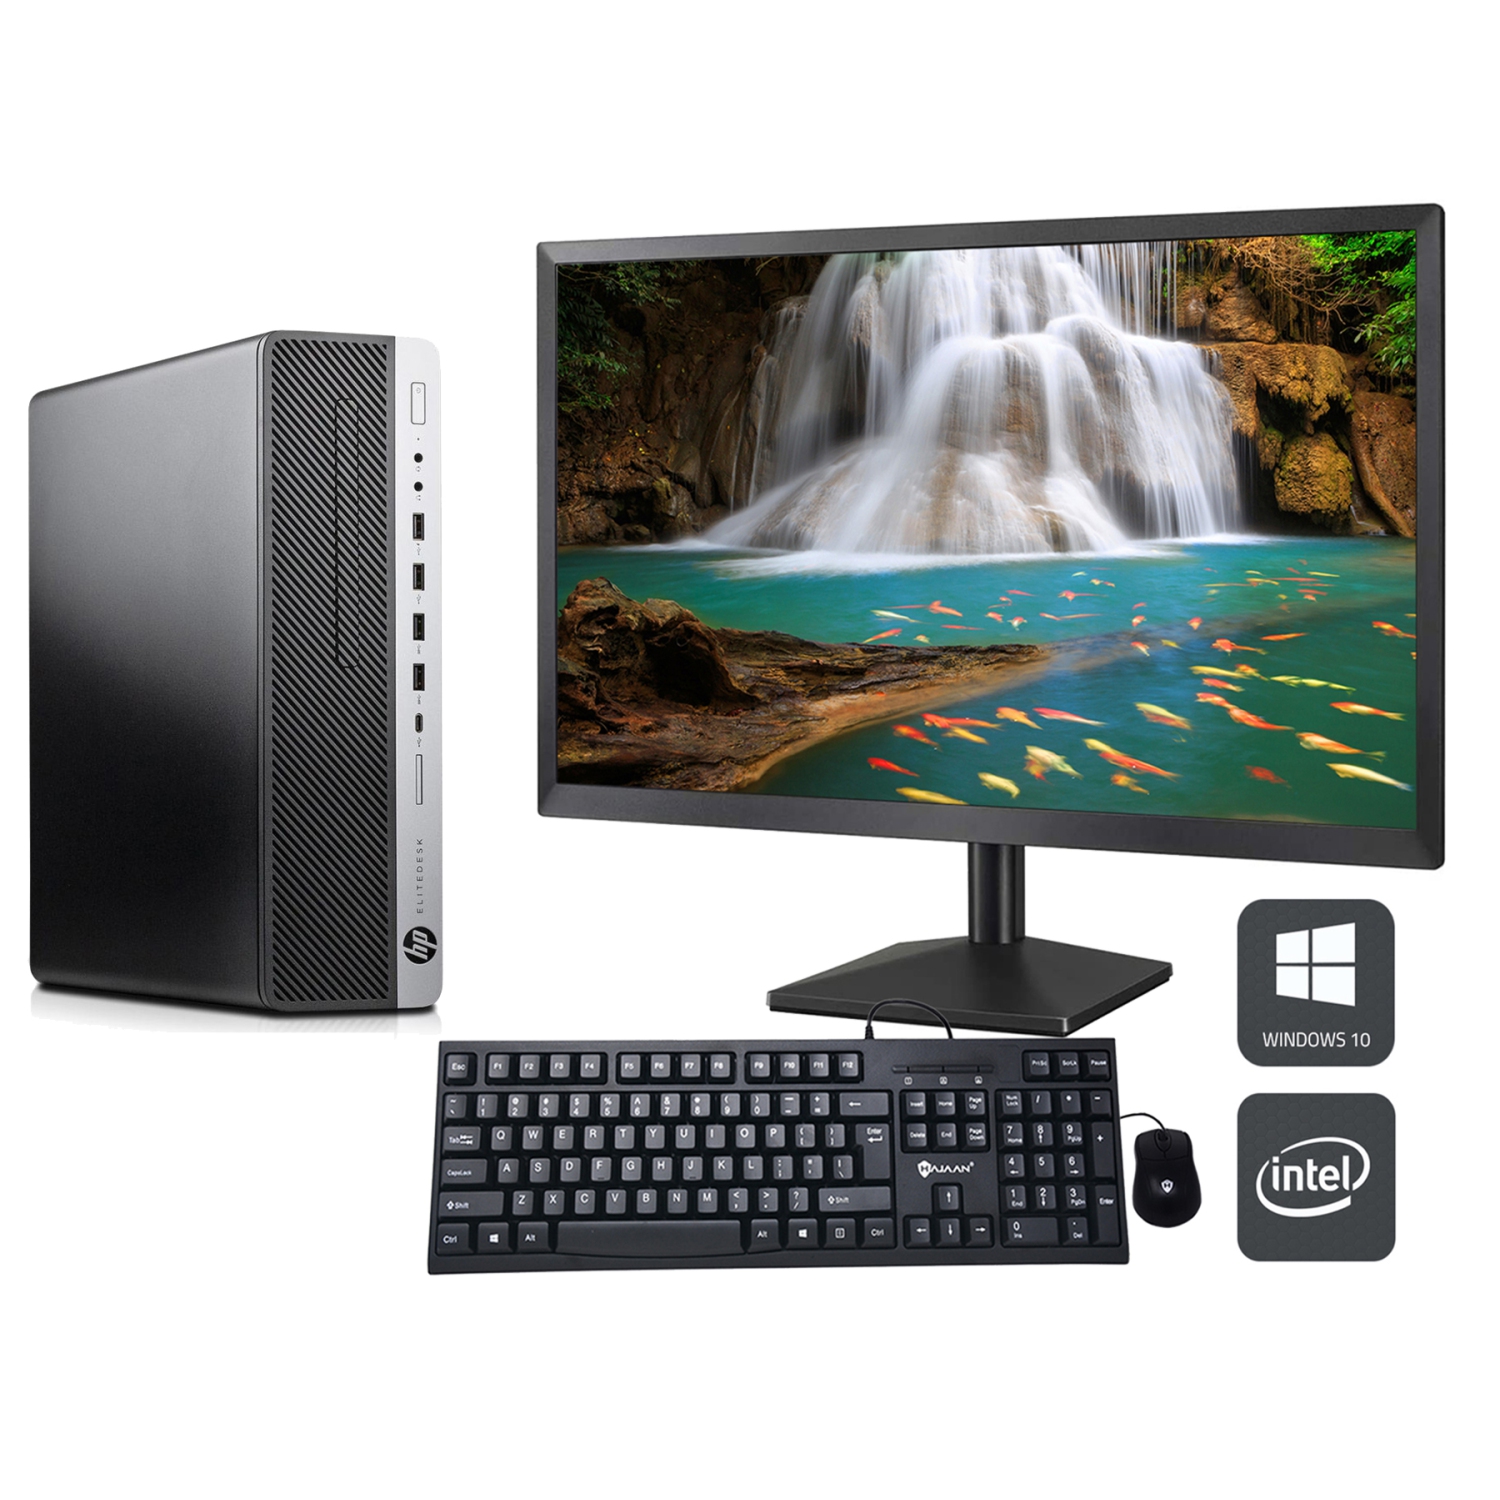 Refurbished (Good) - HP EliteDesk 800 G3 SFF Desktop Computer with 24" Monitor - Intel Core i7-6700 Processor 3.40 GHz 32GB DDR4 RAM 1TB SSD Windows 10 Pro WiFi